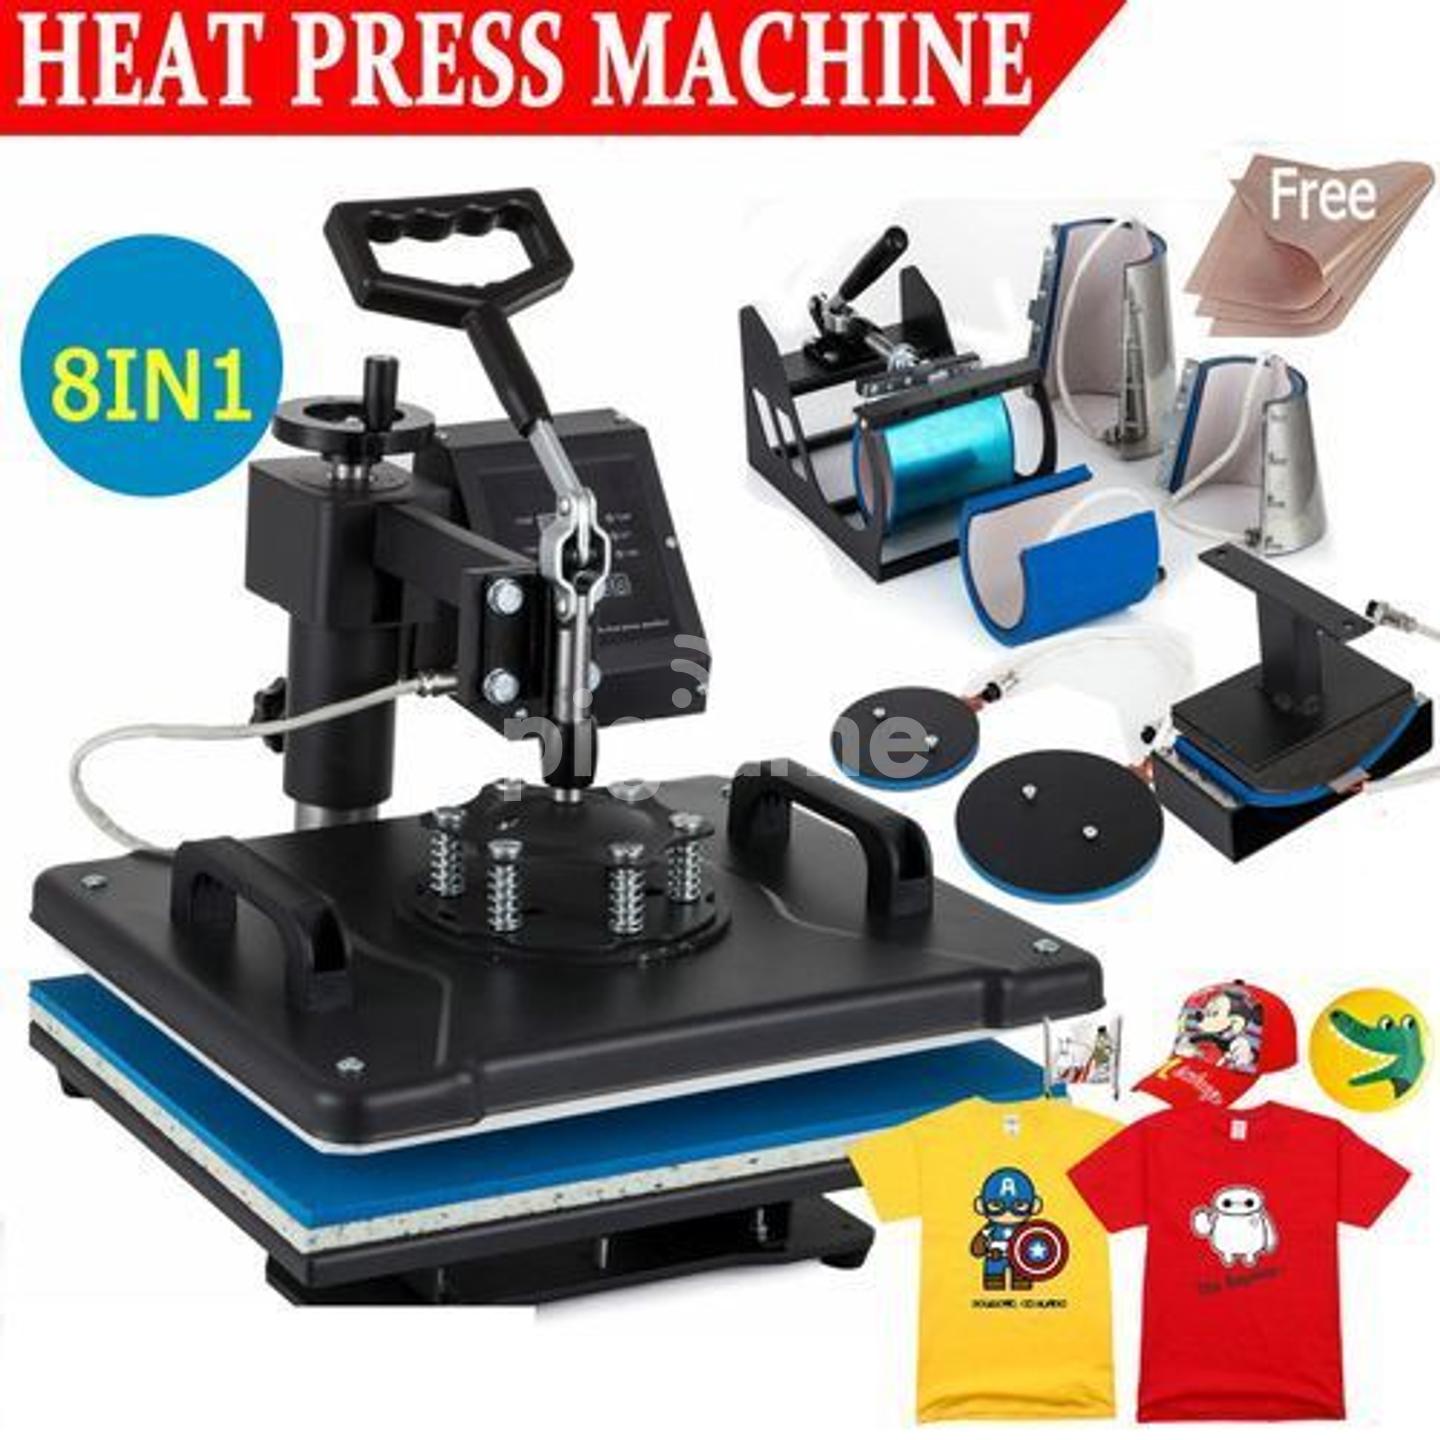 8 In 1 Machine Heat Press in Nairobi CBD, Kimathi Street